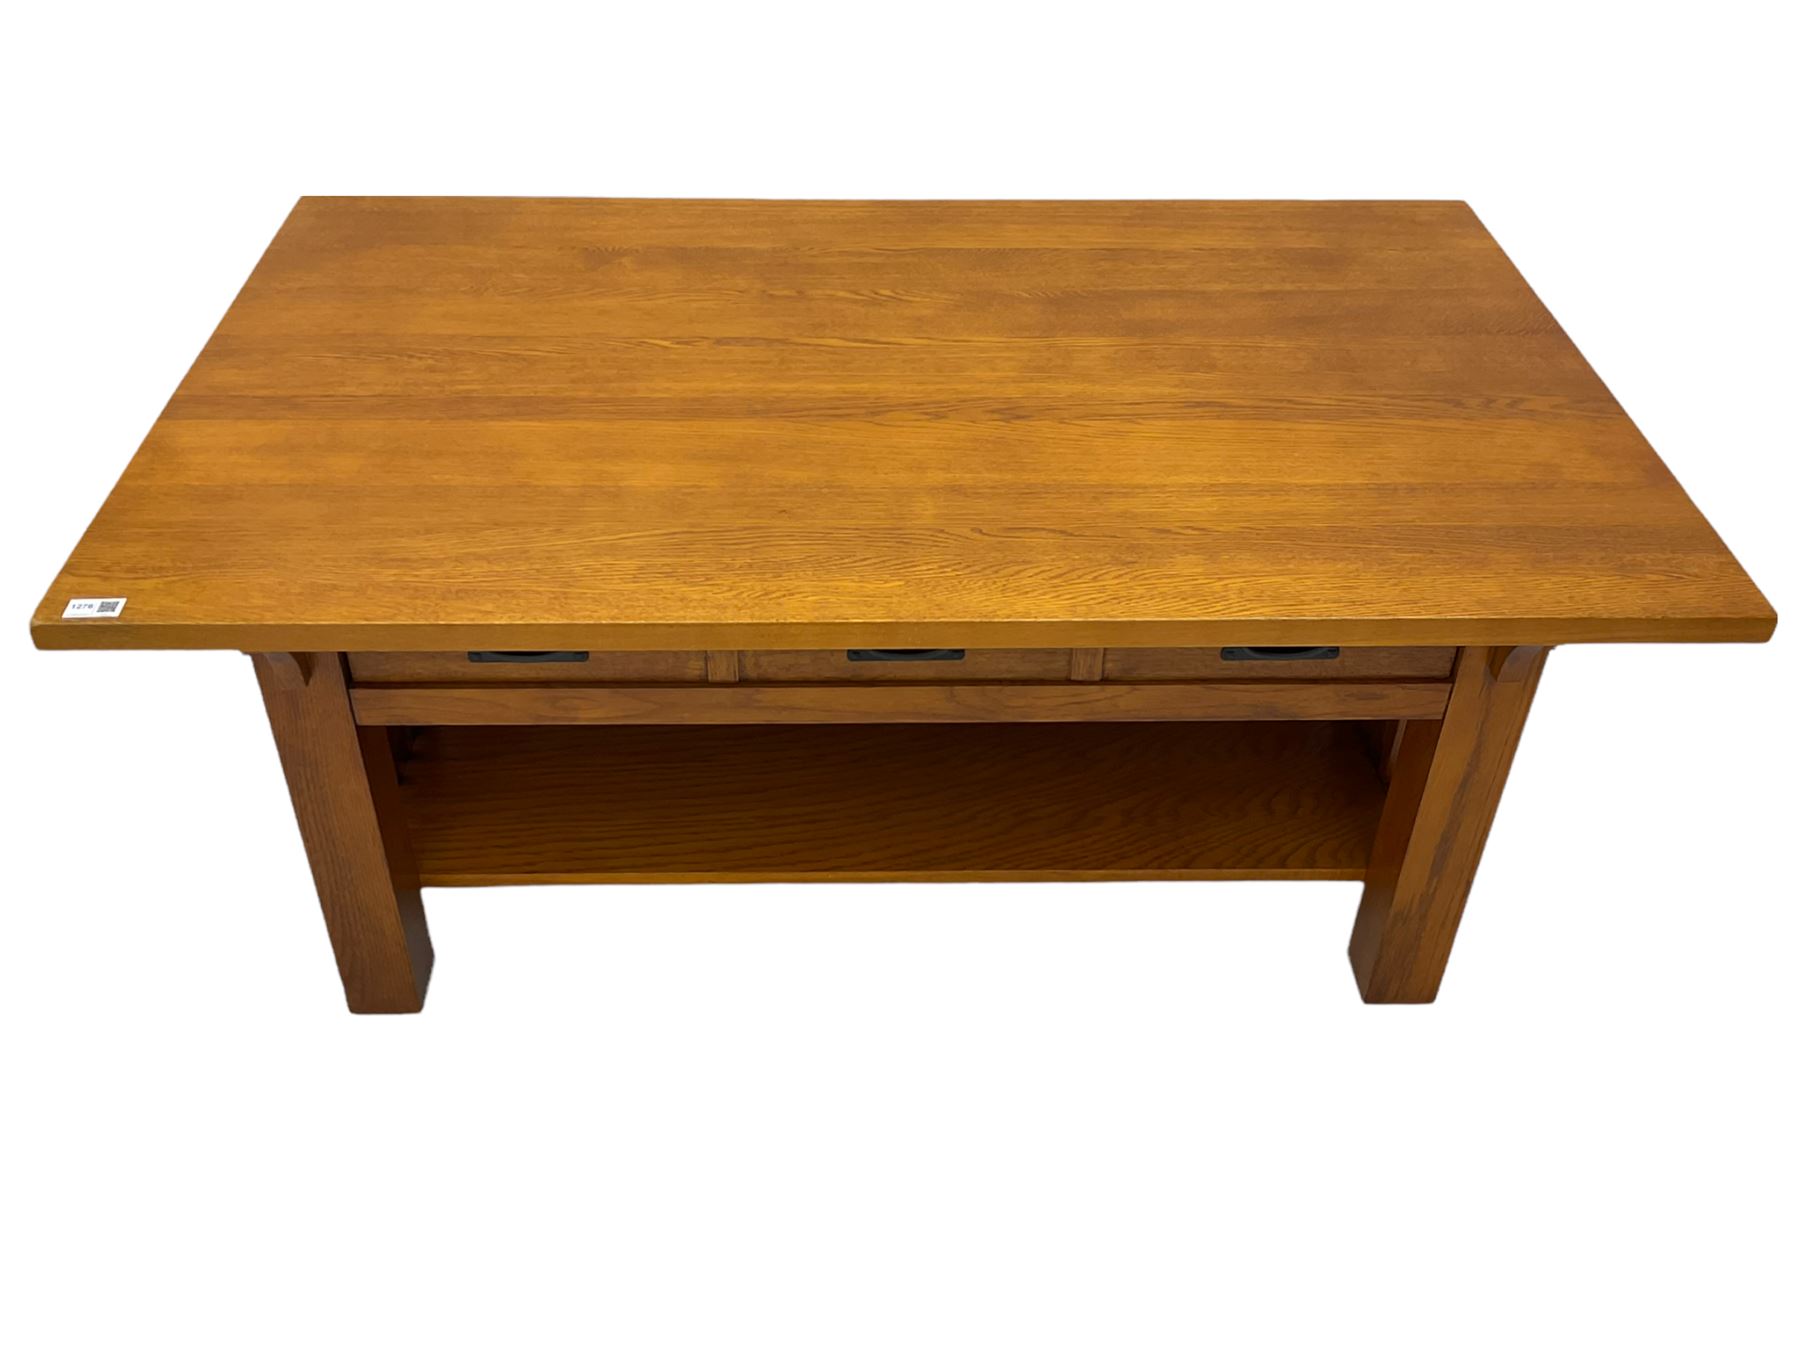 Light oak rectangular coffee table - Image 2 of 5